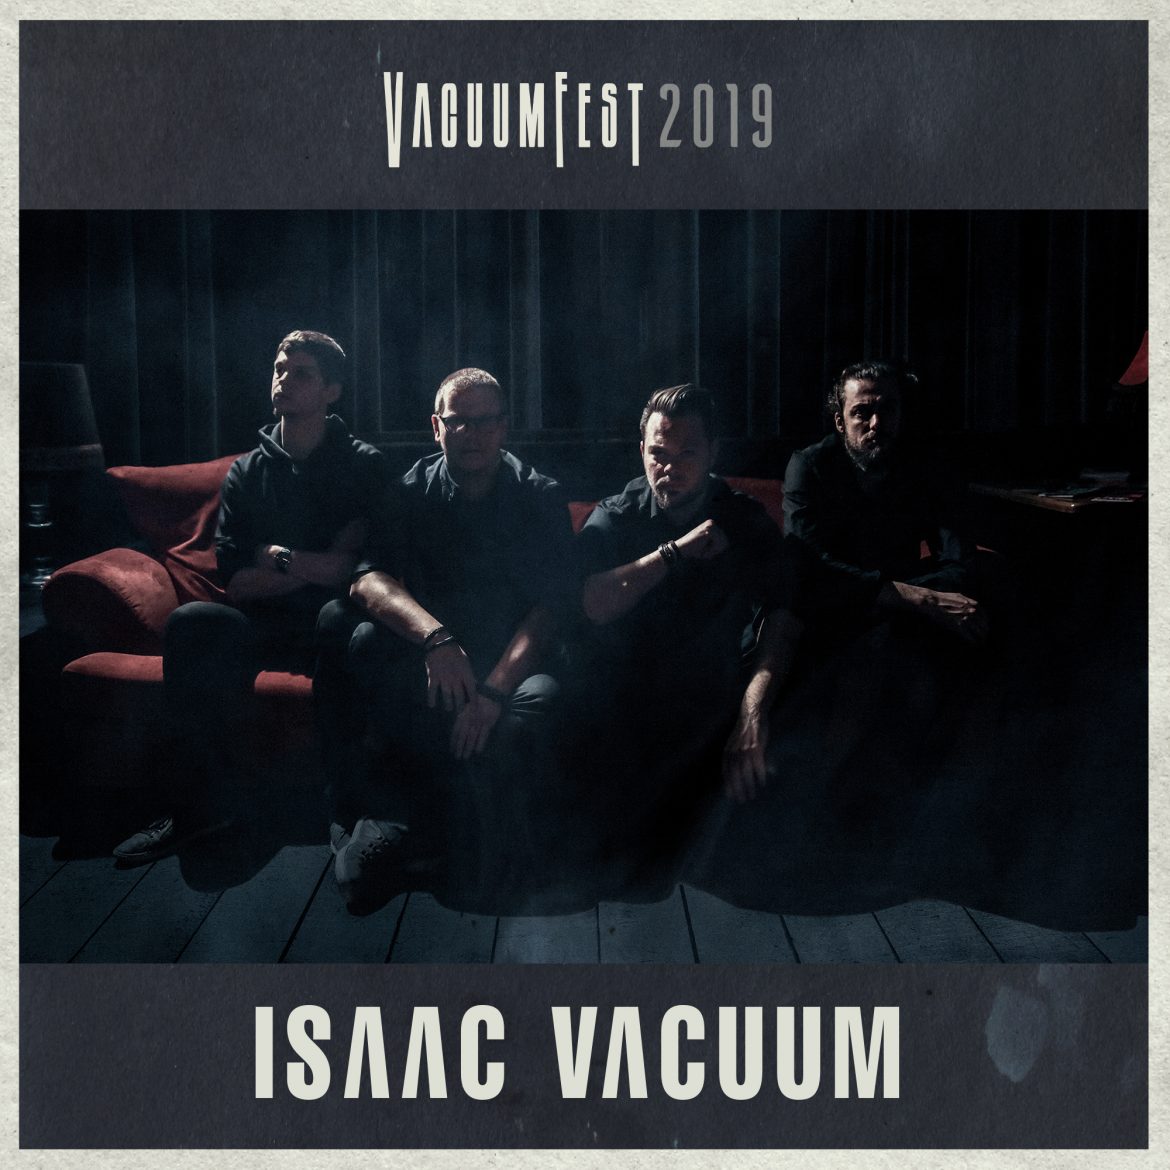 Vacuumfest 2019 - Isaac Vacuum